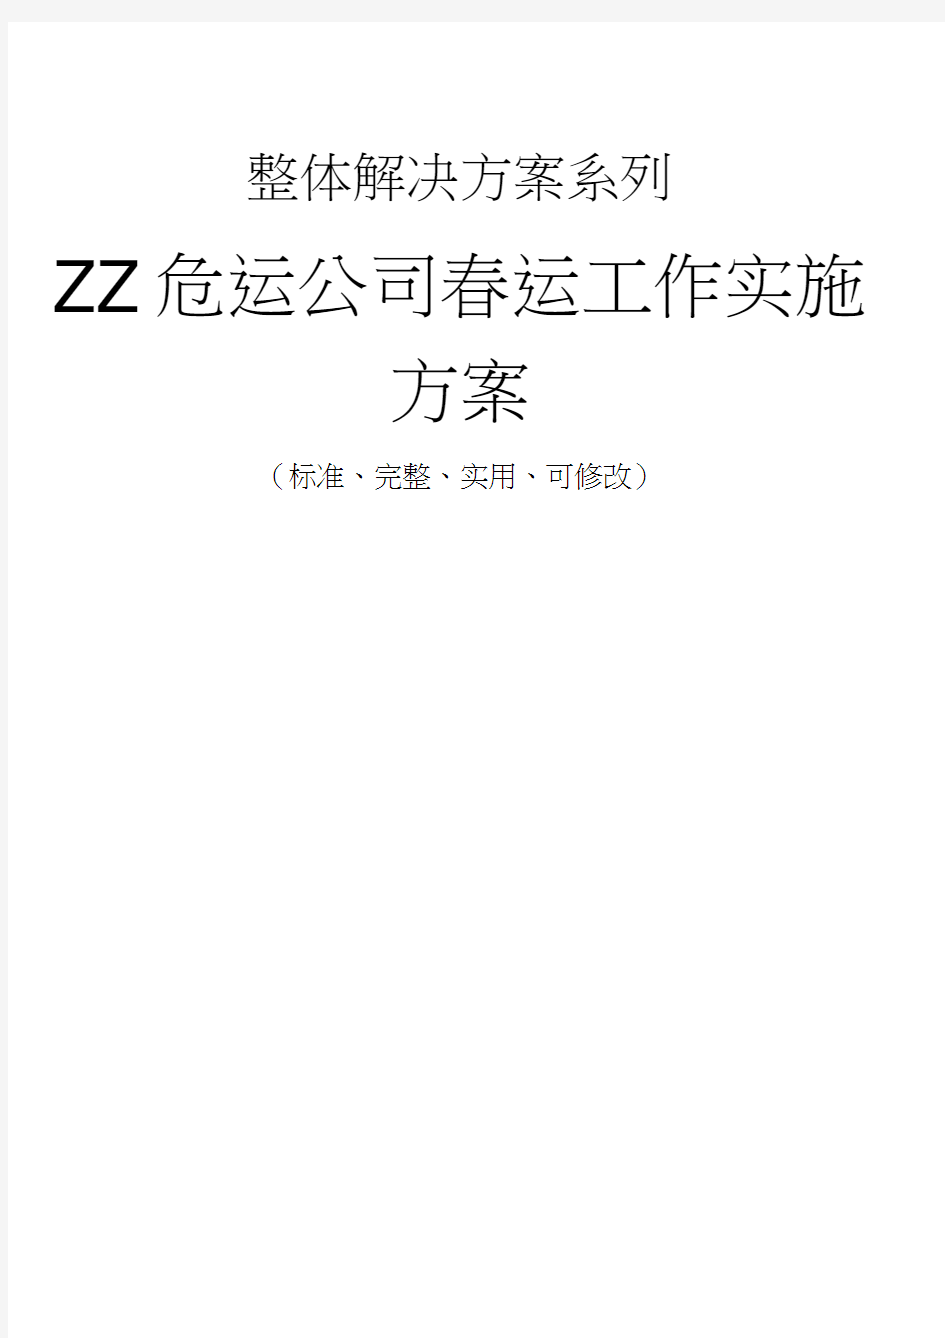 ZZ危运公司春运工作实施方案